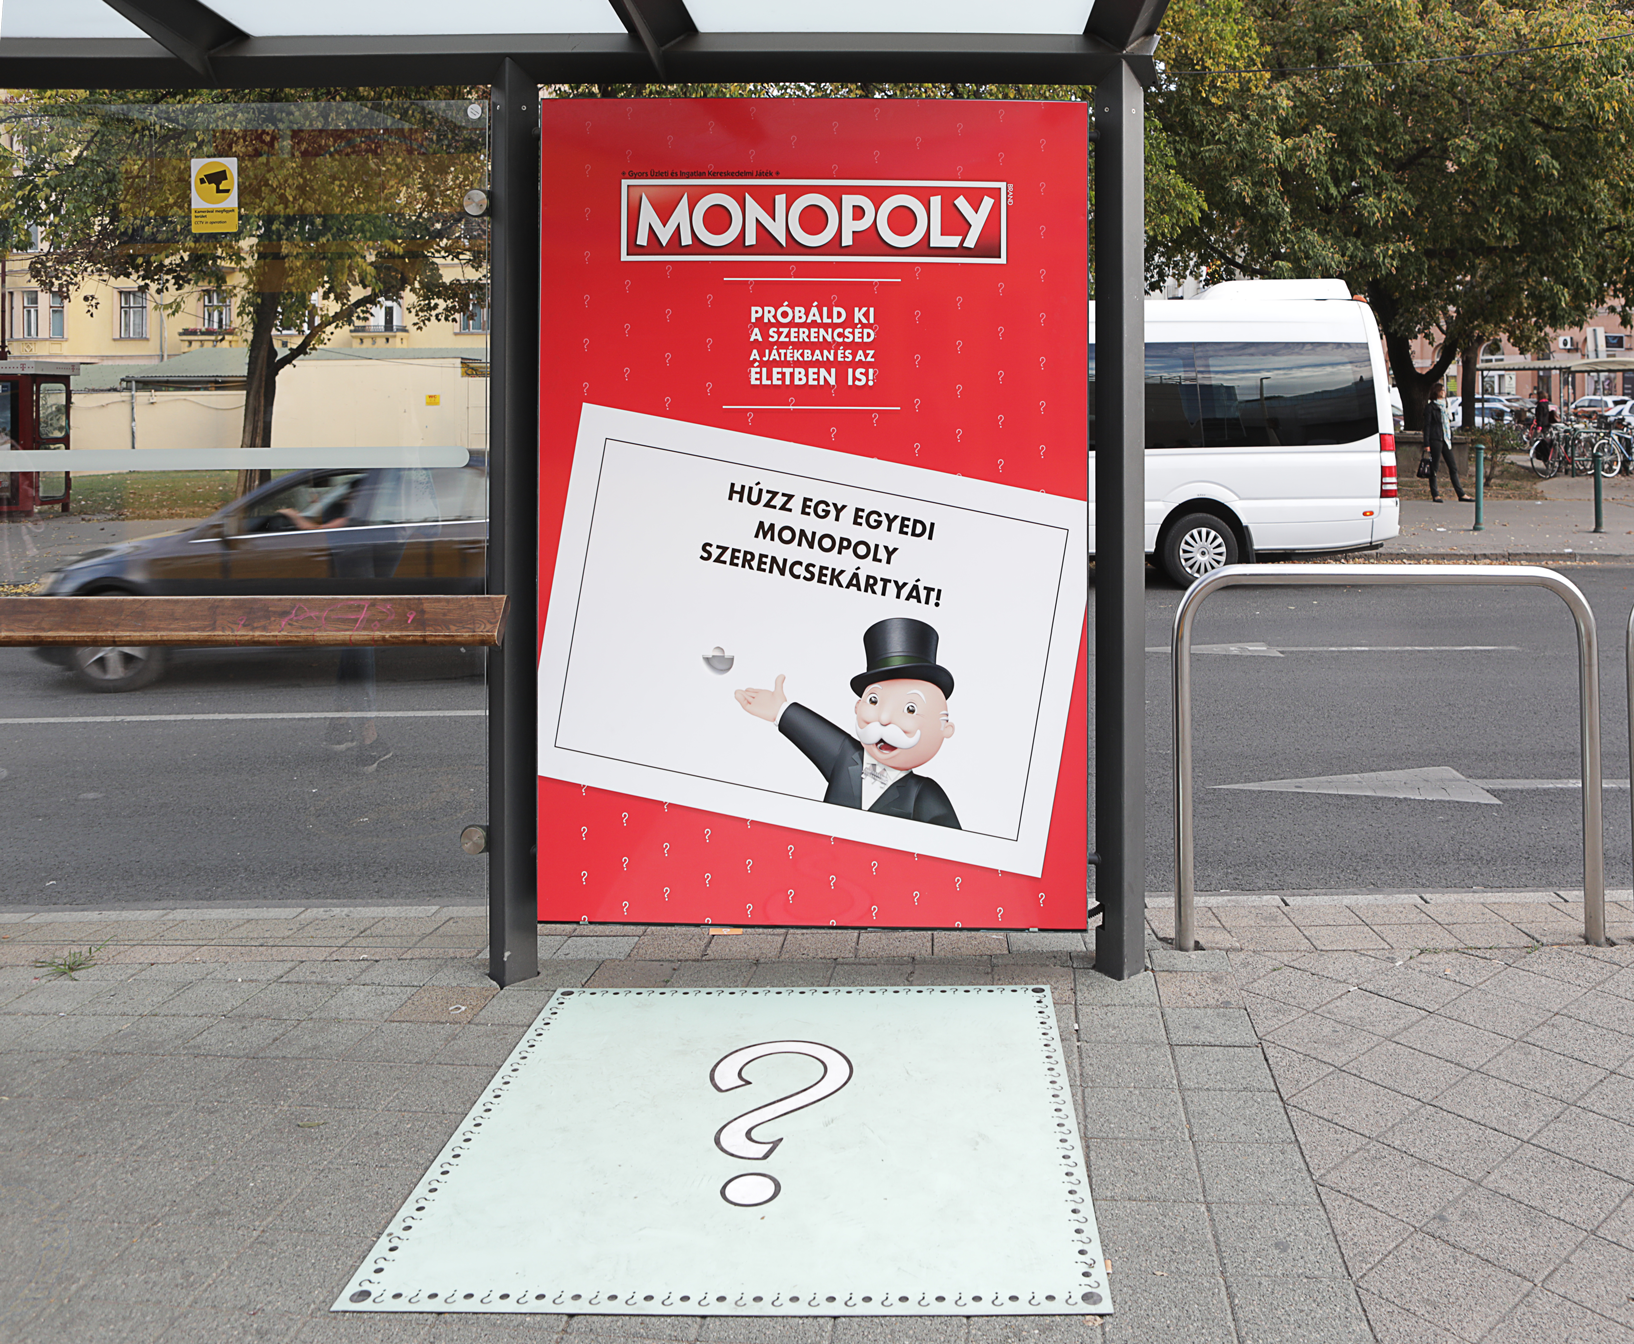 Monopoly_Szerencsemegallo (3)